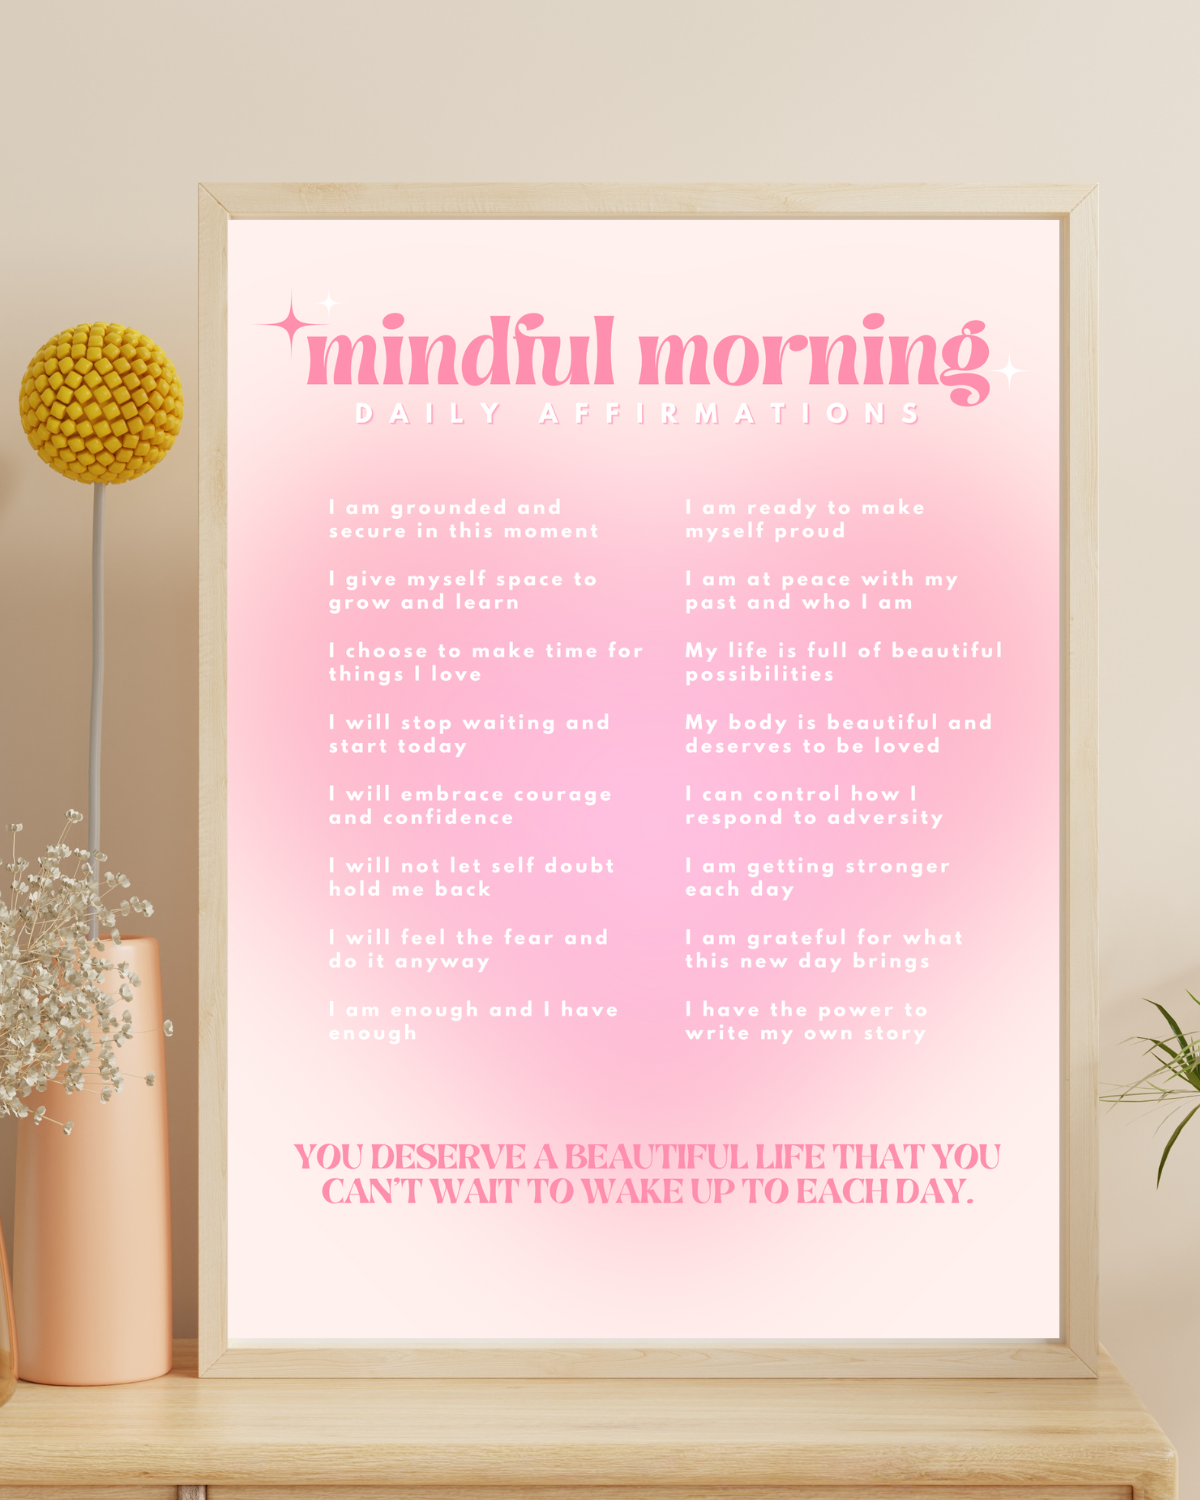 Mindful Morning Affirmations Poster - Aura Heart design